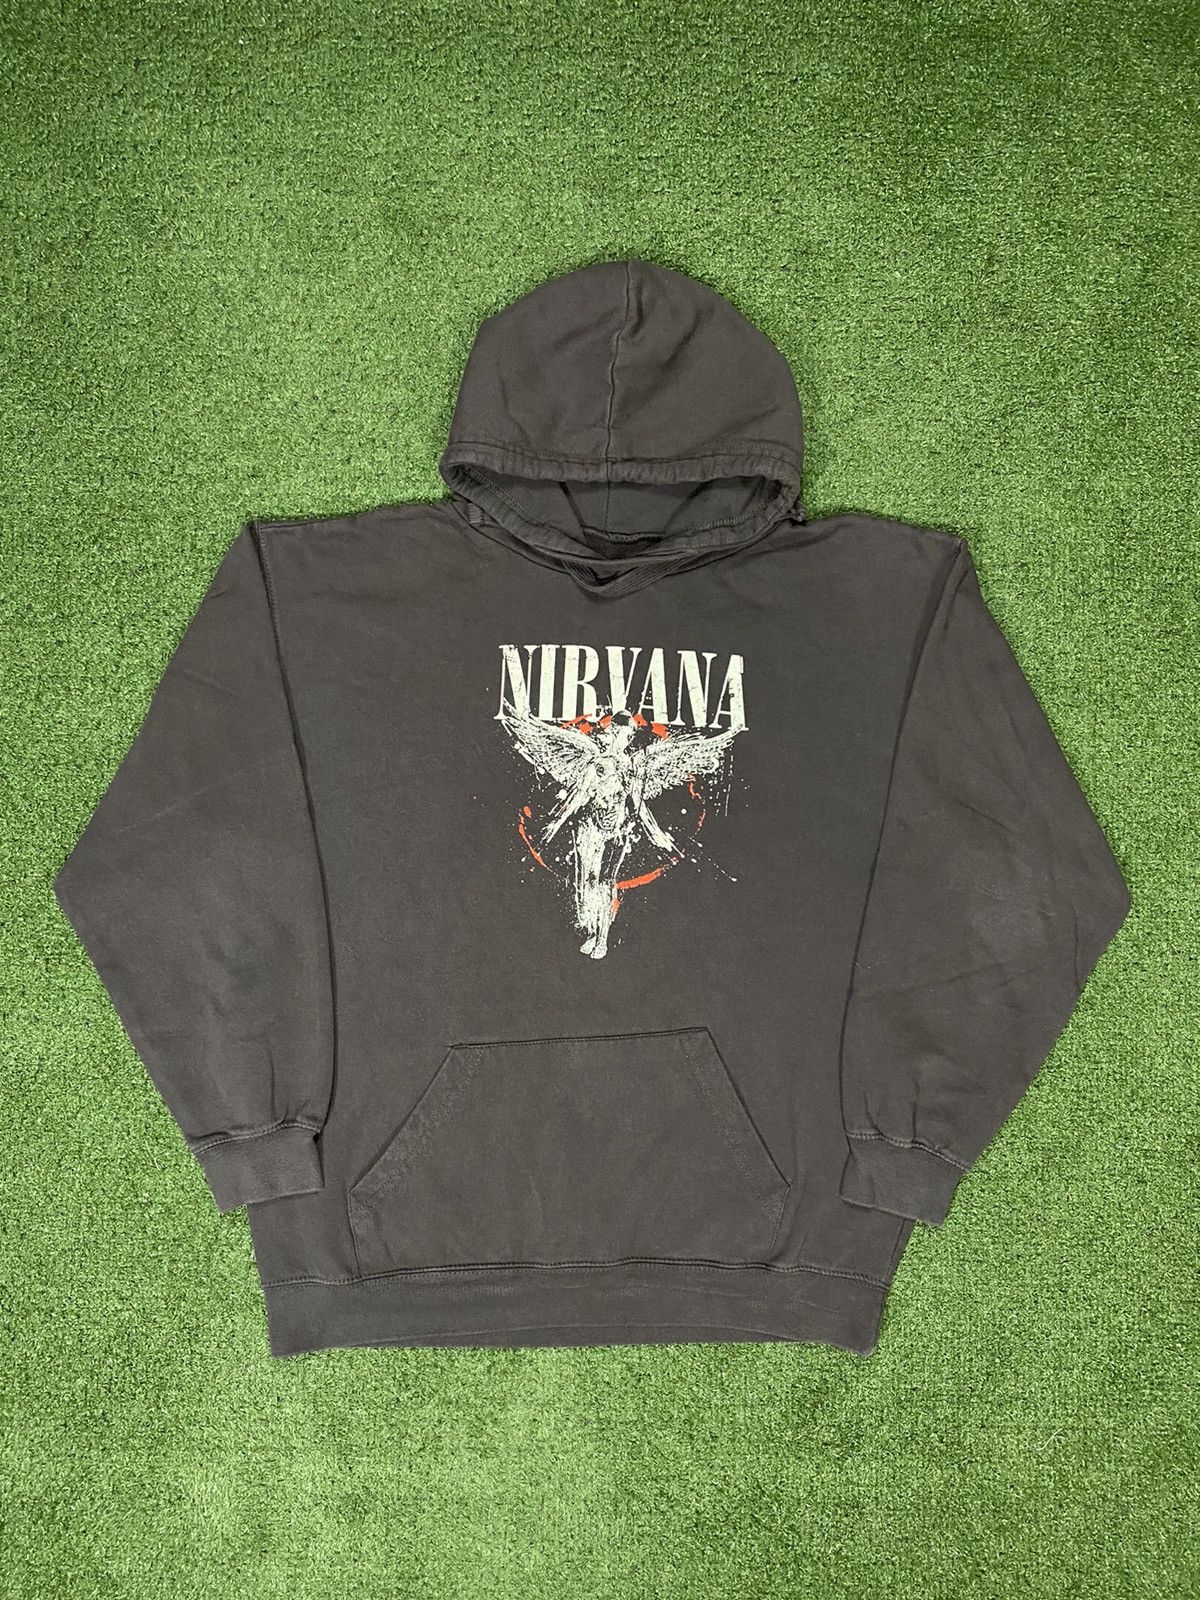 Nirvana 2018 Faded Nirvana “in utero” graphic hoodie reprint | Grailed